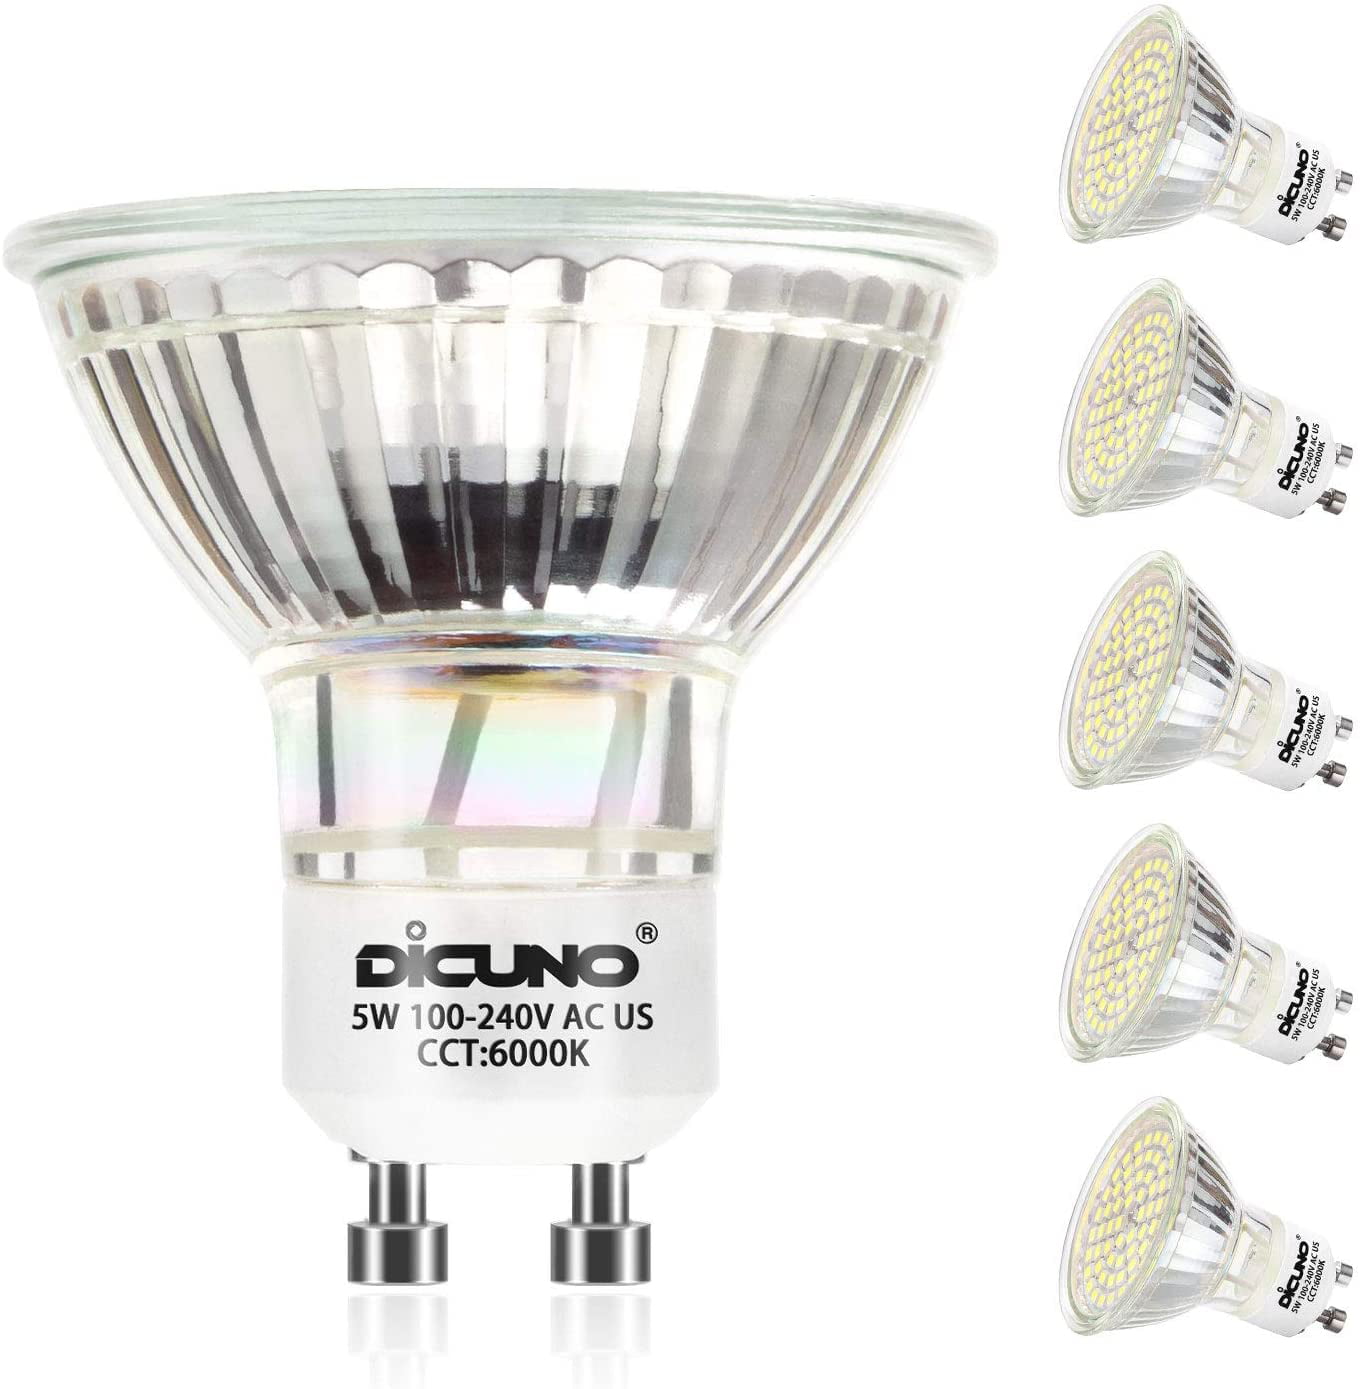 GU10 LED Bulbs 5W Daylight White 6000K, 500lm, 120 Beam Angle, Spotlight, 50W Halogen Bulbs Equivalent, Non-dimmable MR16 Light Bulbs, 6-Pack -